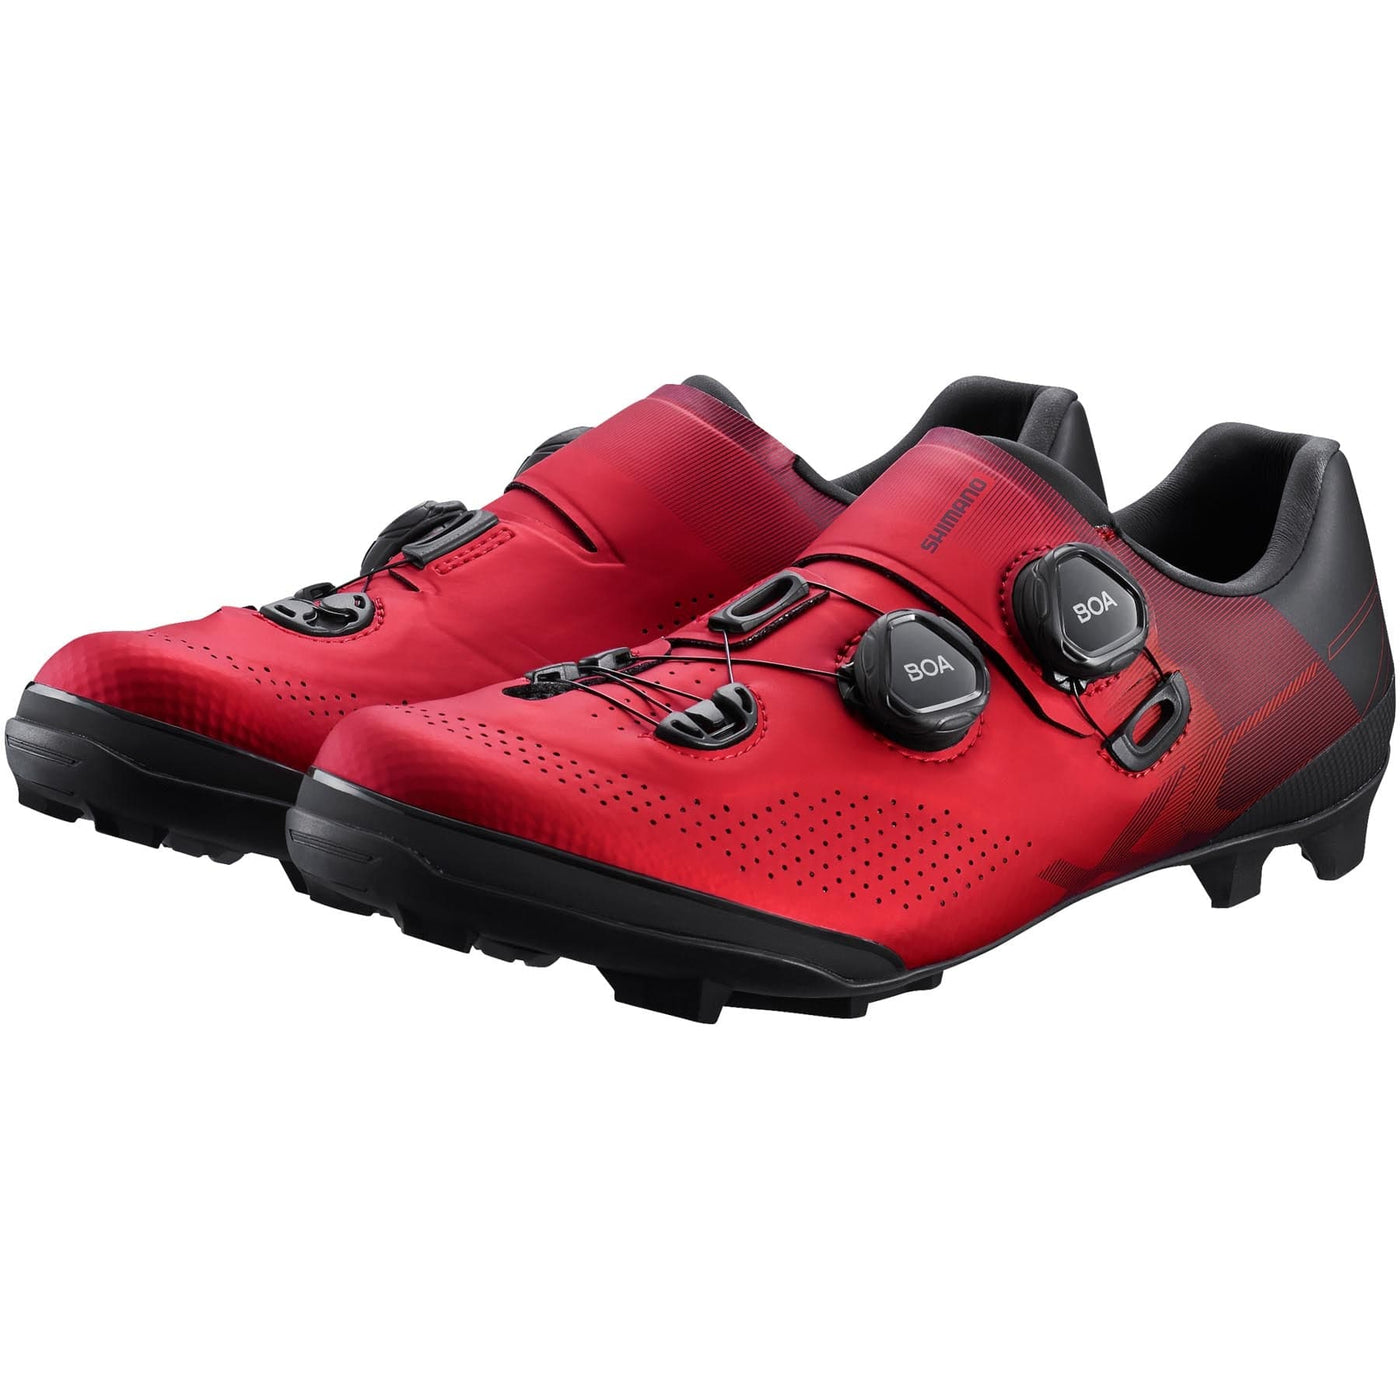 Pair of Red Shimano mountinbike shoes | 8Lines.eu